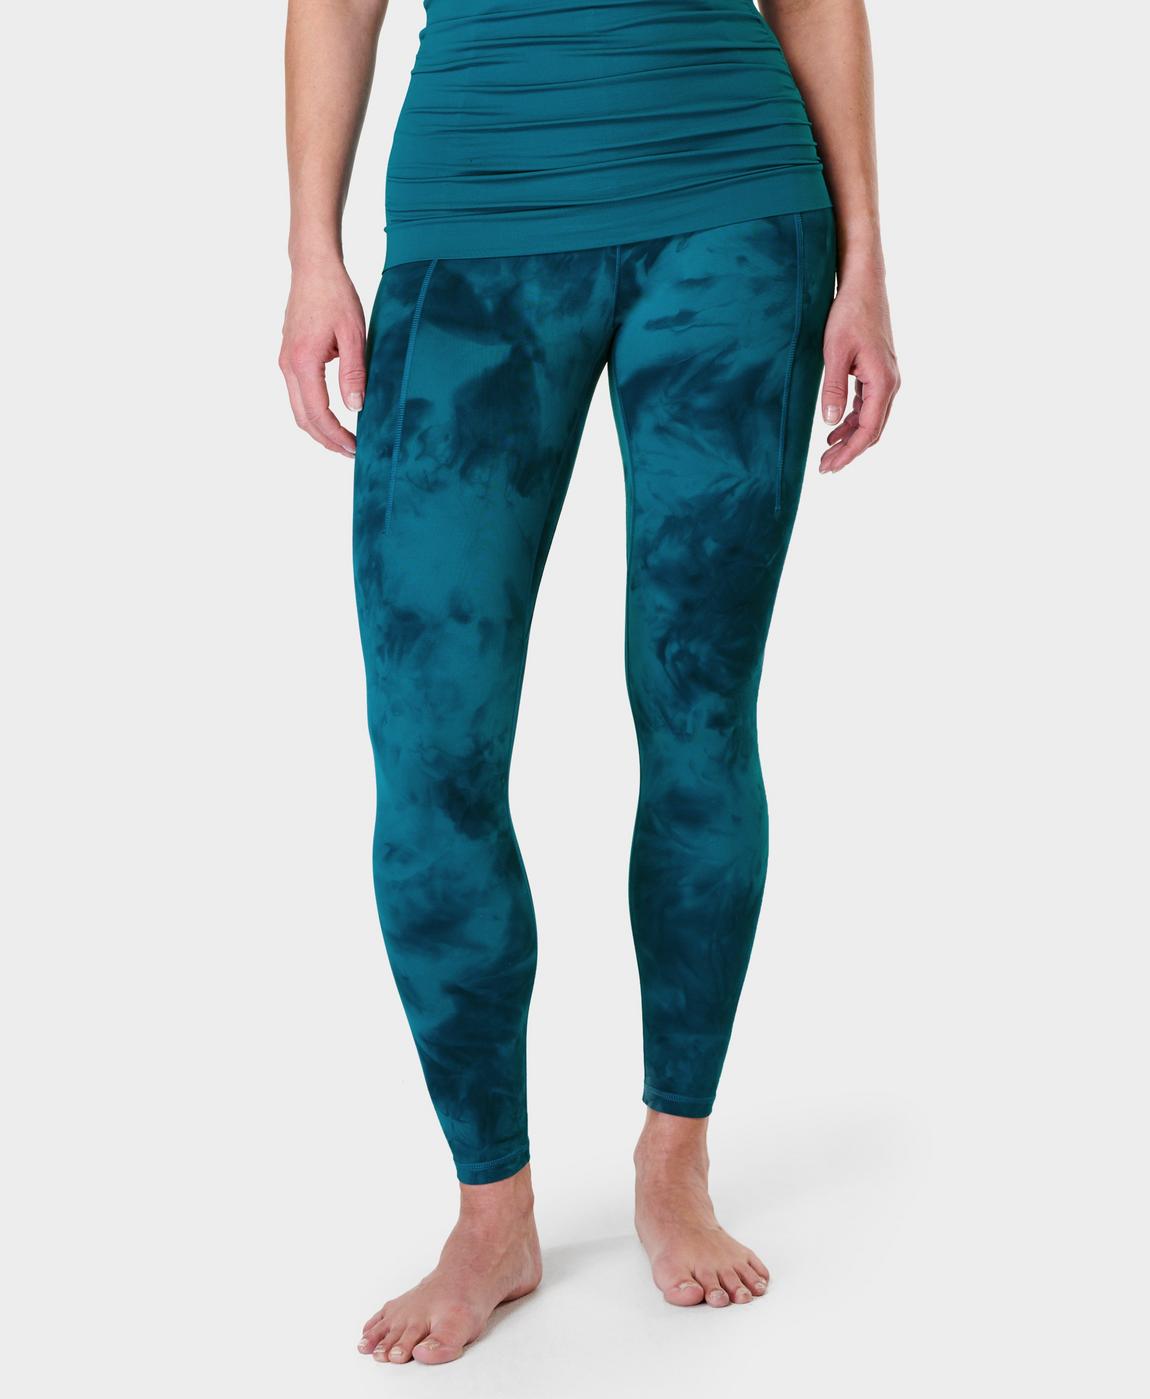 Super Soft 7/8 Yoga Leggings - Reef Teal Blue Marl, Women's Leggings